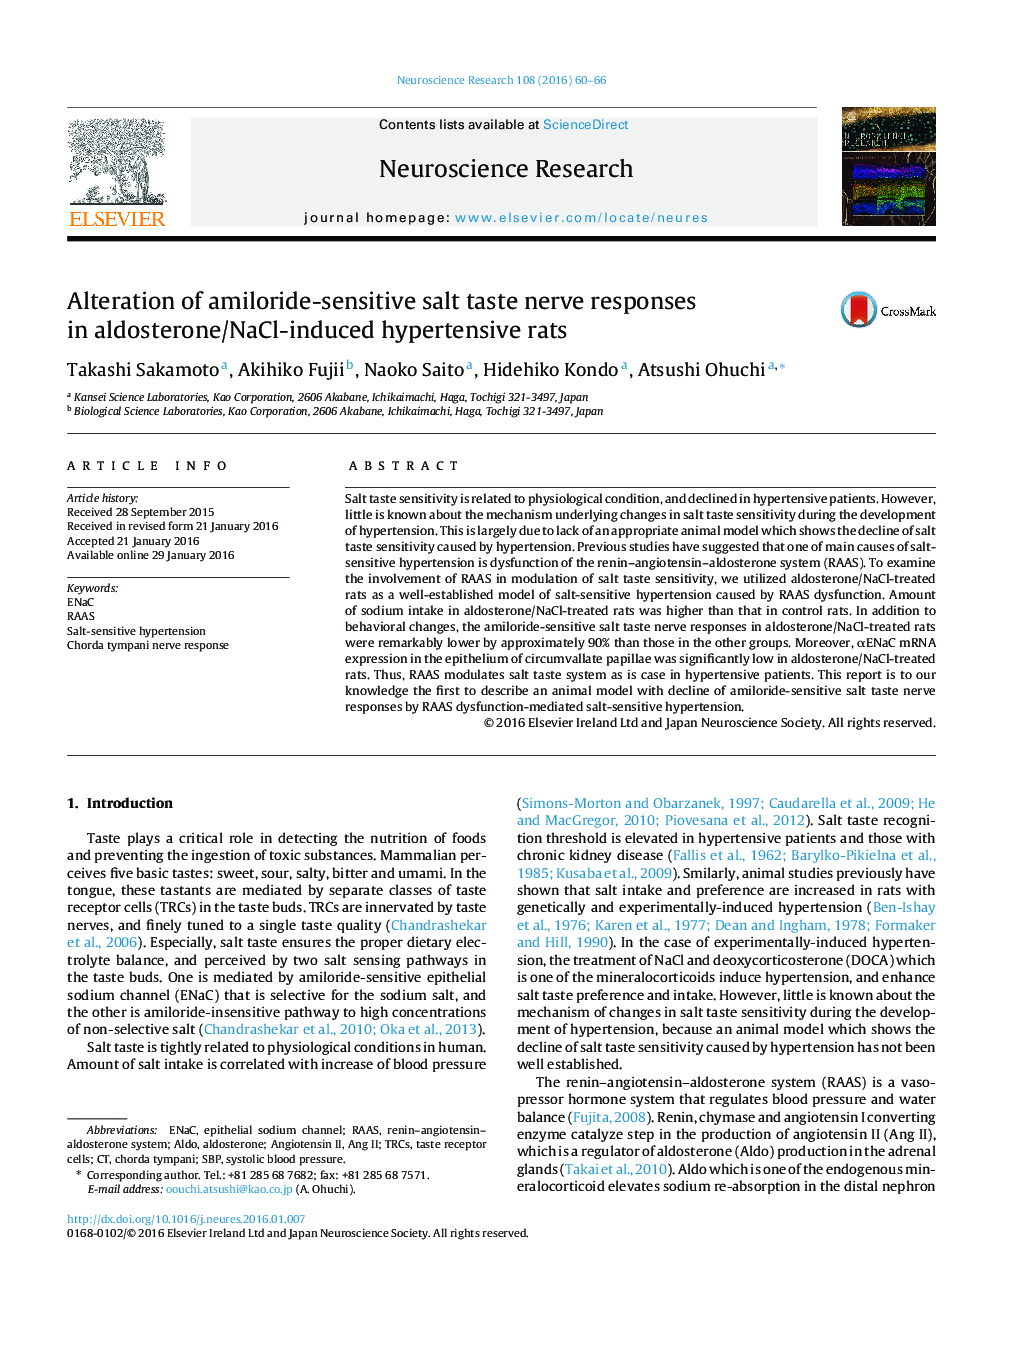 Alteration of amiloride-sensitive salt taste nerve responses in aldosterone/NaCl-induced hypertensive rats